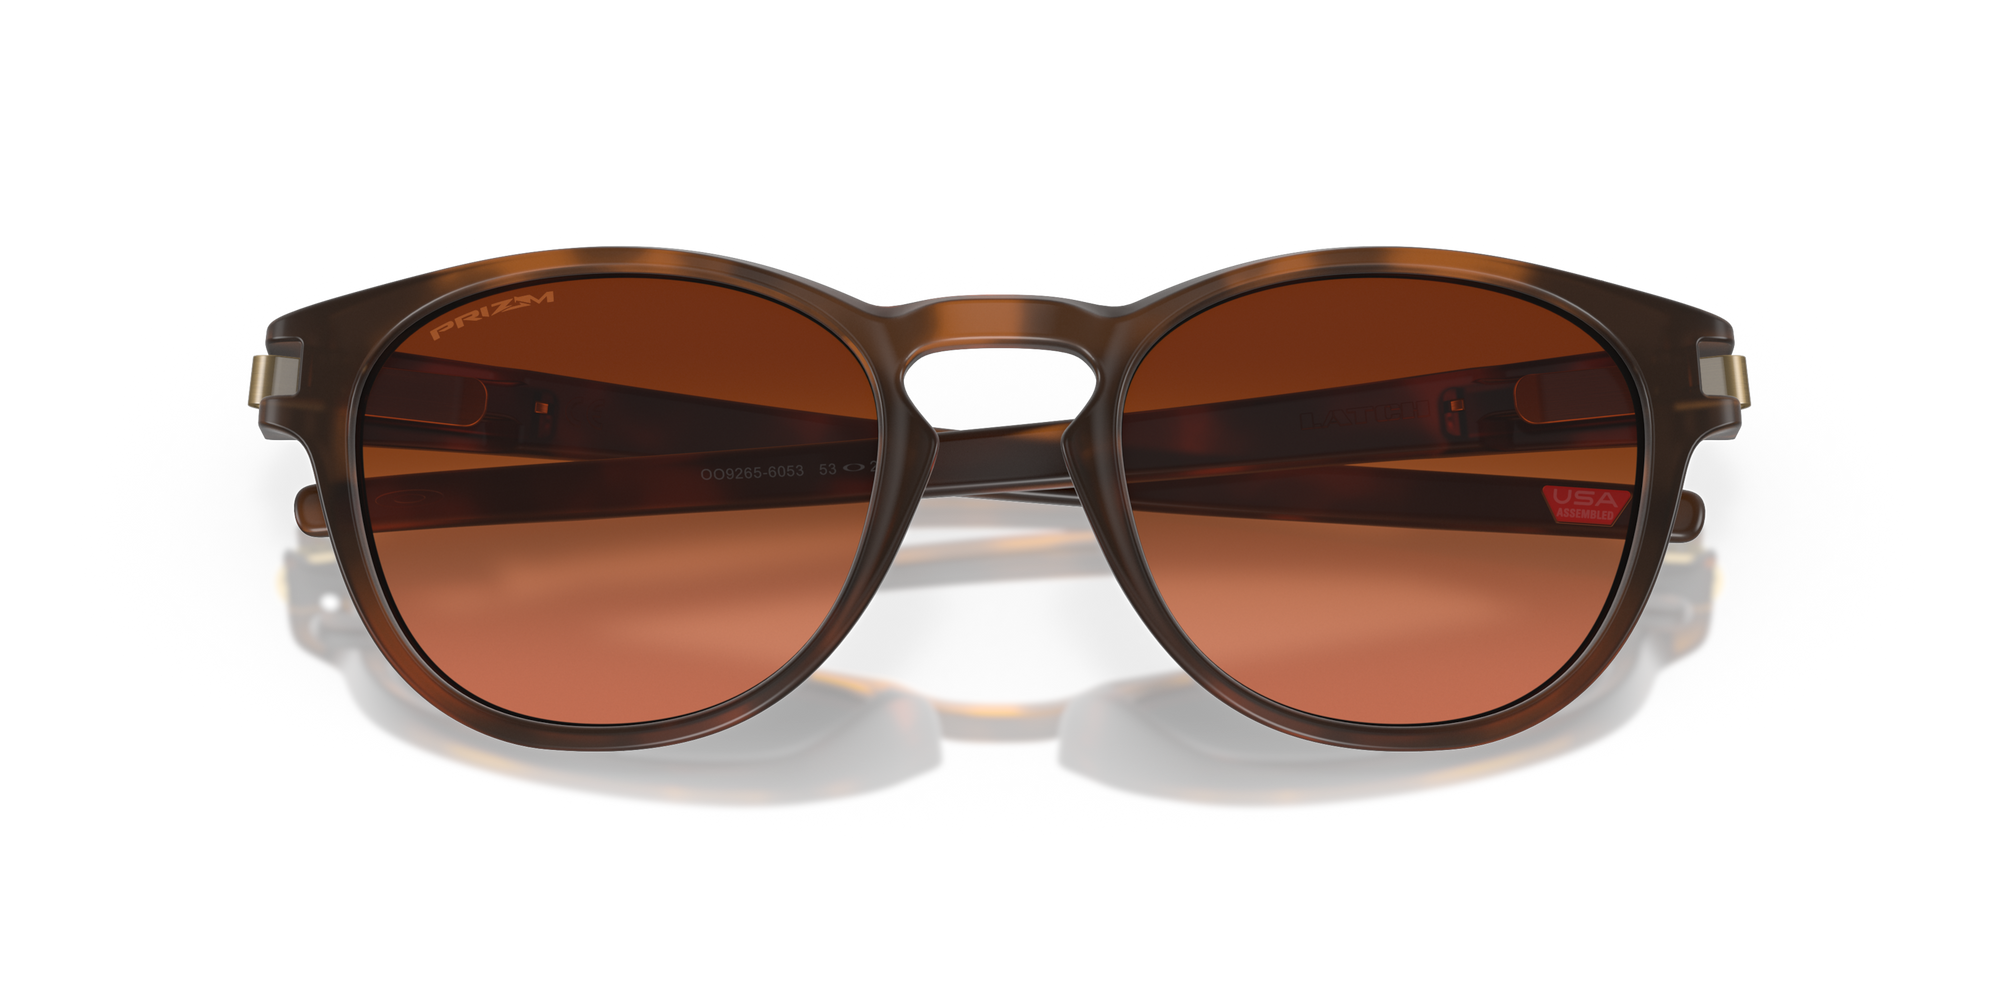 Latch Sunglasses Matte Brown Tortoise - Prizm Brown Gradient Lens